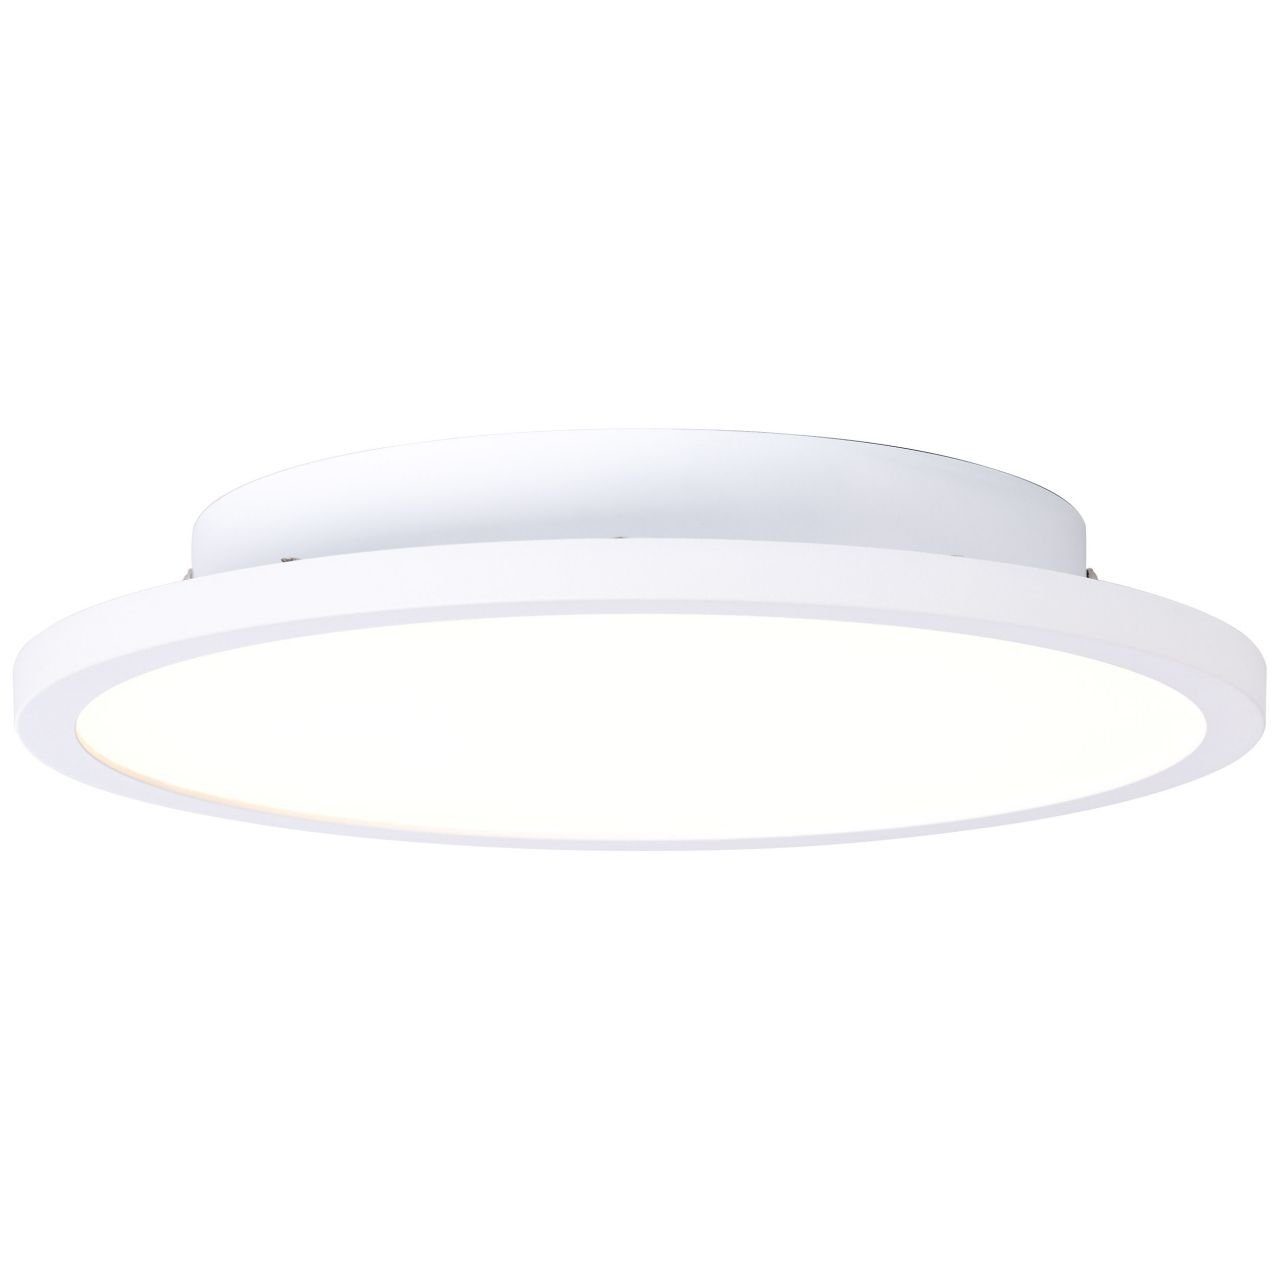 Buffi, LED 25cm Metall/K Buffi sand/weiß/warmweiß, Deckenaufbau-Paneel Deckenleuchte Lampe, Brilliant